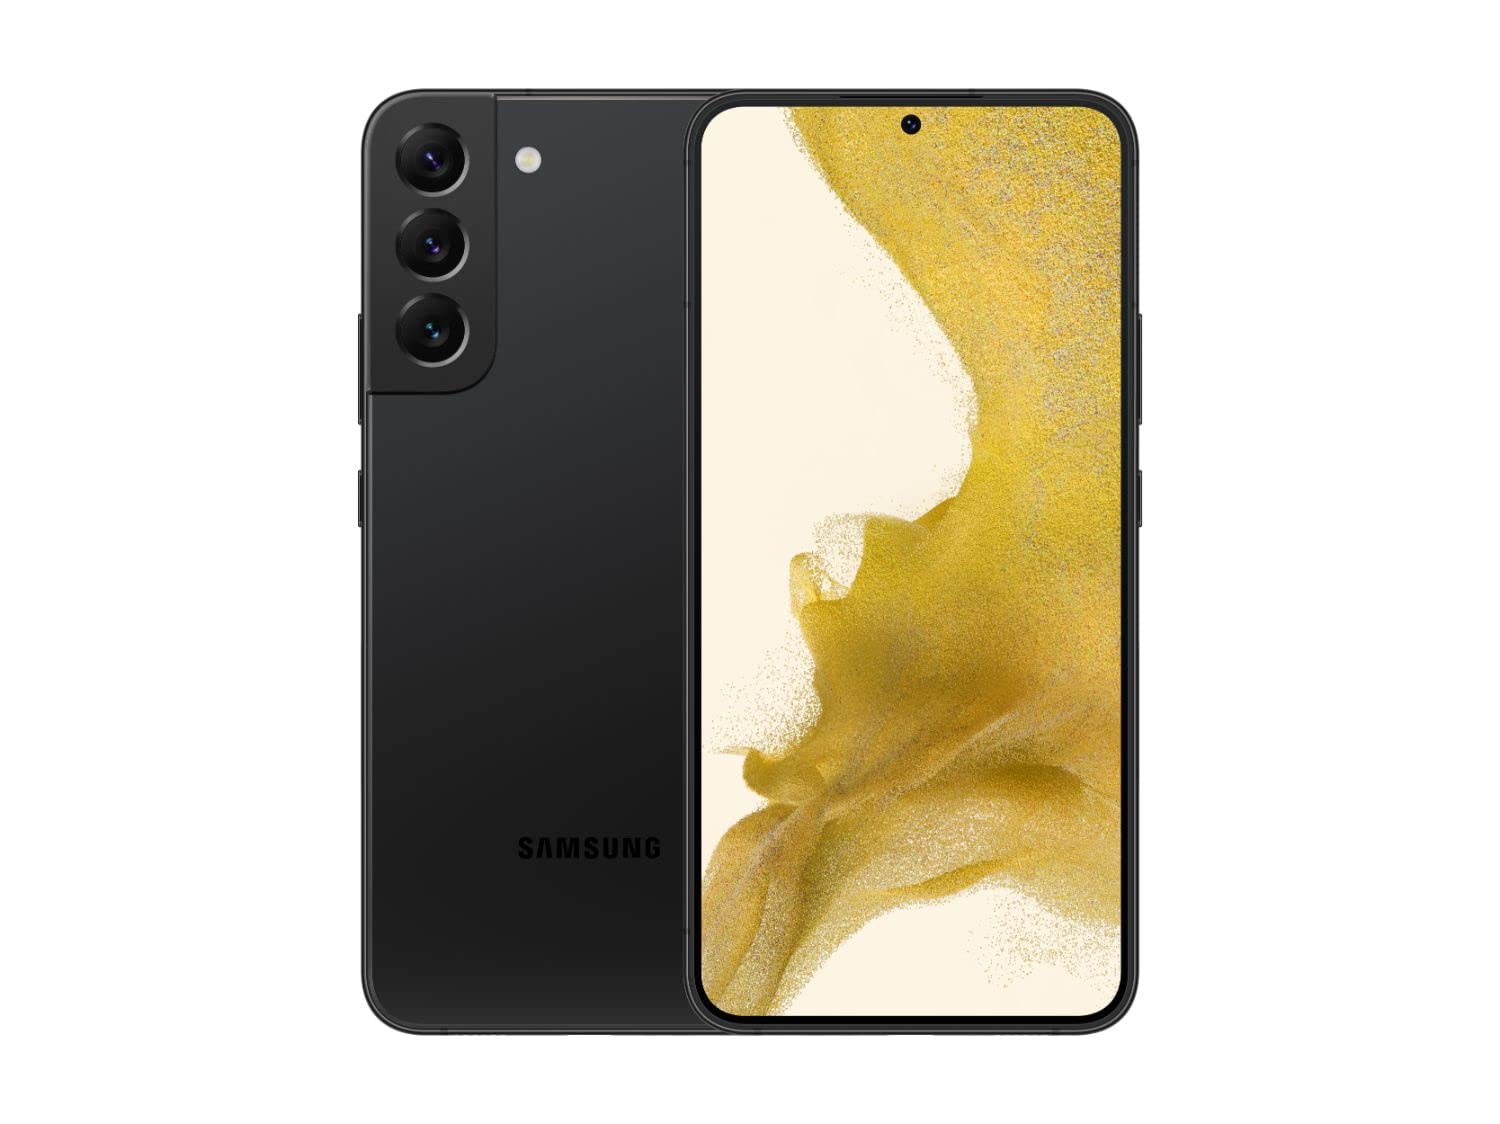 Samsung Galaxy S22+ 128GB Phantom Black, Unlocked - $699.99 - Amazon.com